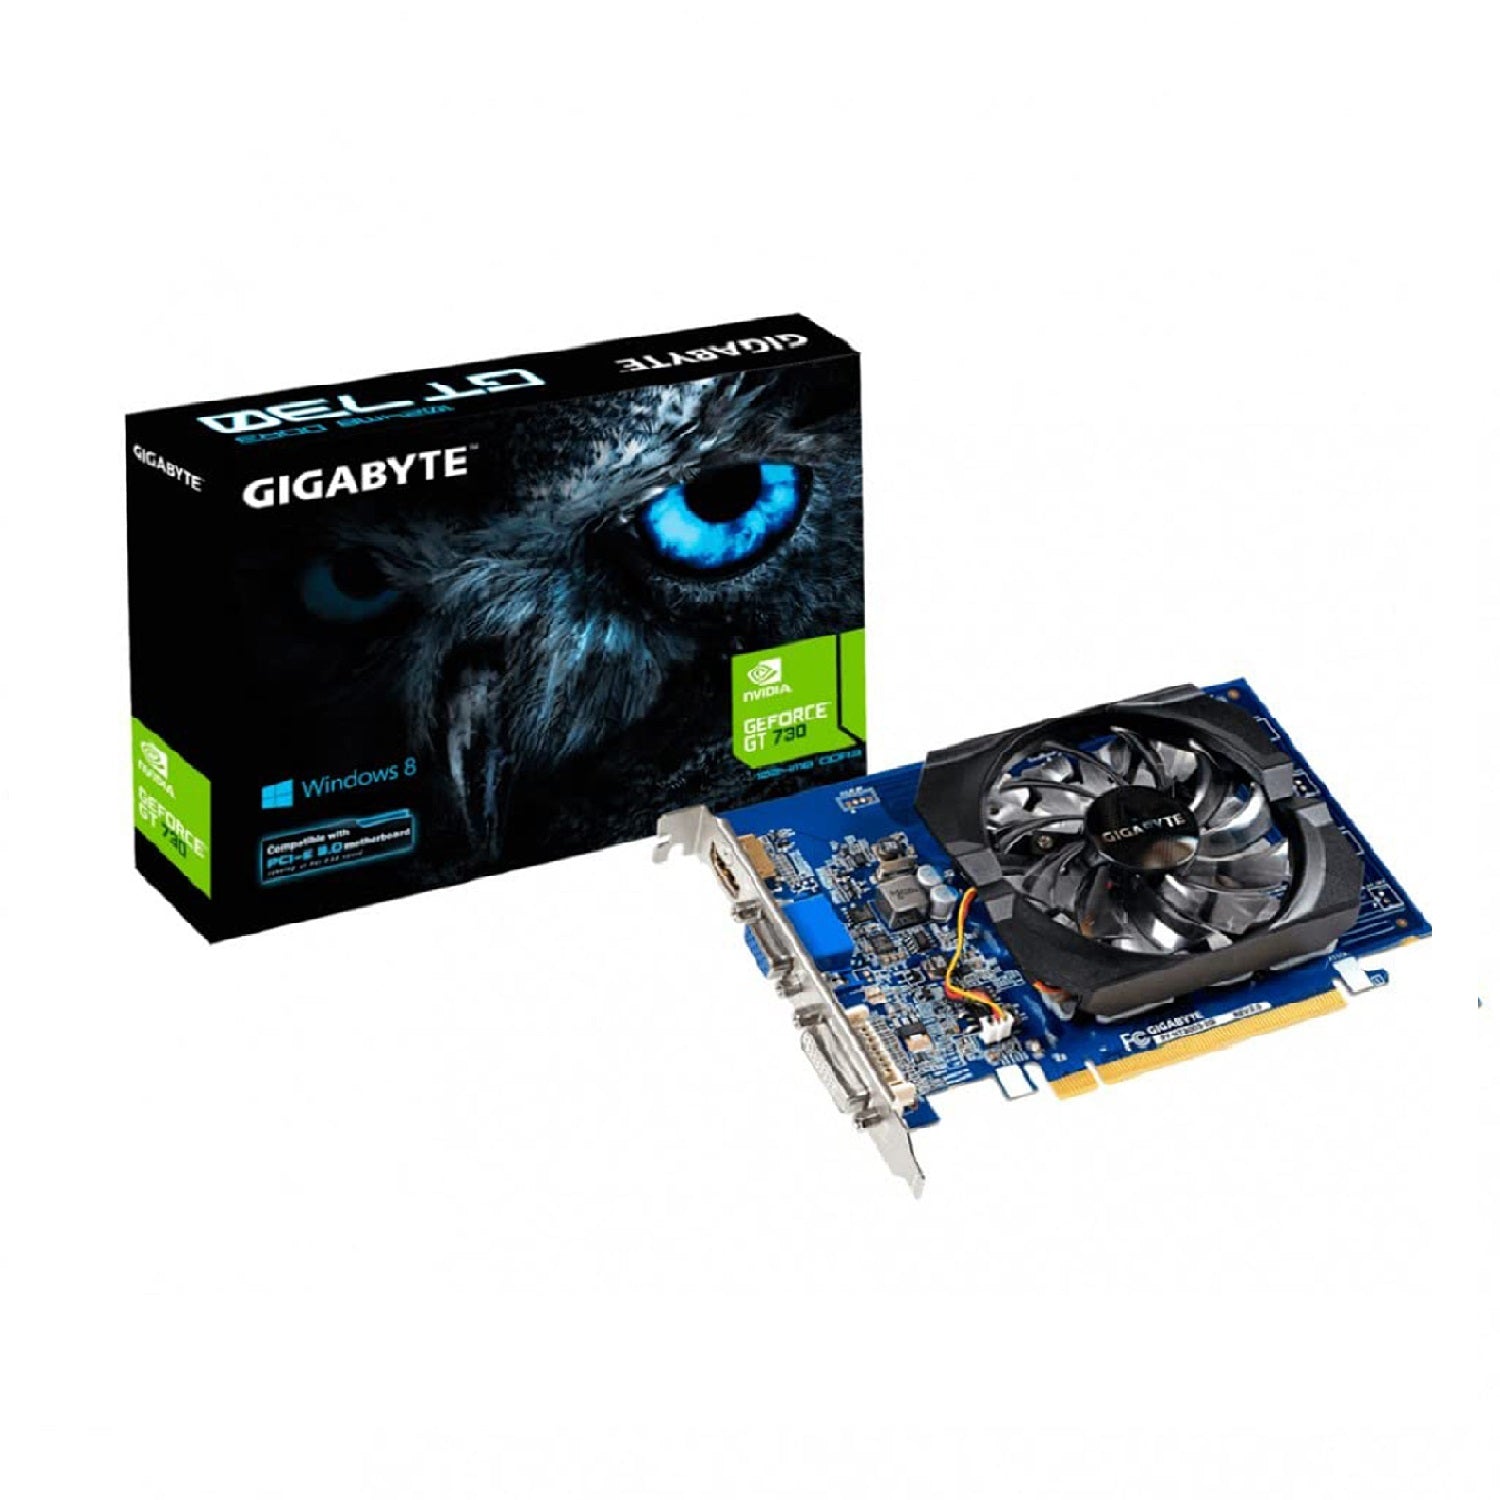 Gigabyte NVIDIA GeForce GT 370 Graphics Card - Single Fan 2GB DDR3, PCIe 2.0 Video Card, HDMI, VGA, DVI (GV-N730D3-2GI REV3.0)